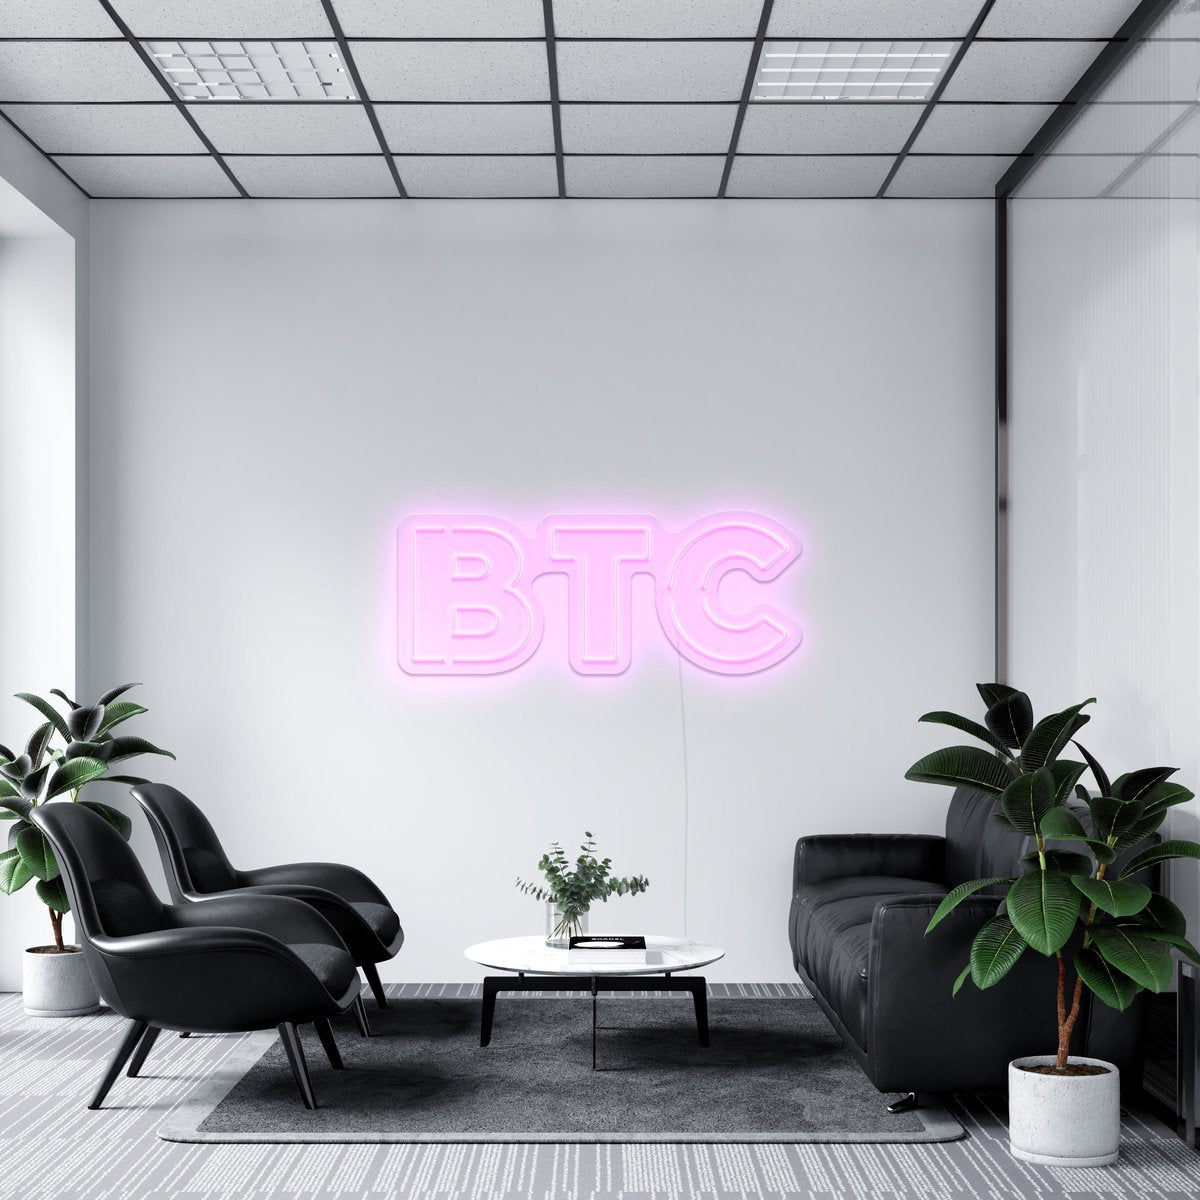 'BTC' LED Neon Sign